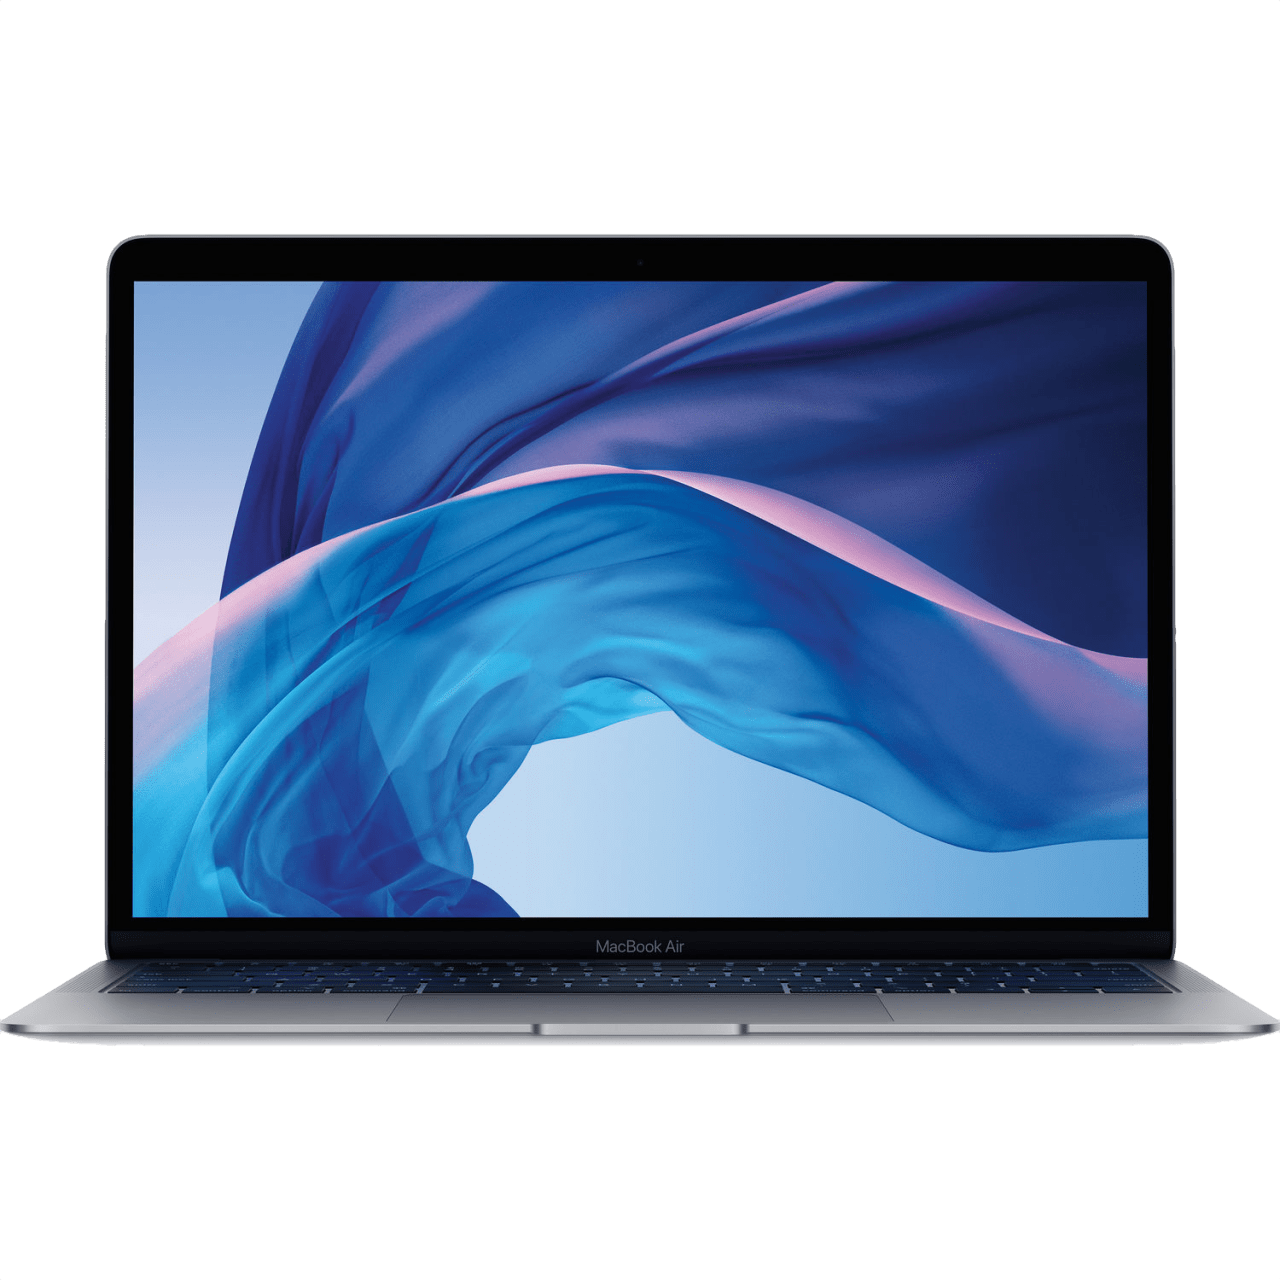 Space Grey Apple Macbook Air (Mid 2019) - English (QWERTY) Laptop - Intel® Core™ i5-8210Y - 16GB - 256GB SSD - Intel® UHD Graphics 617.1